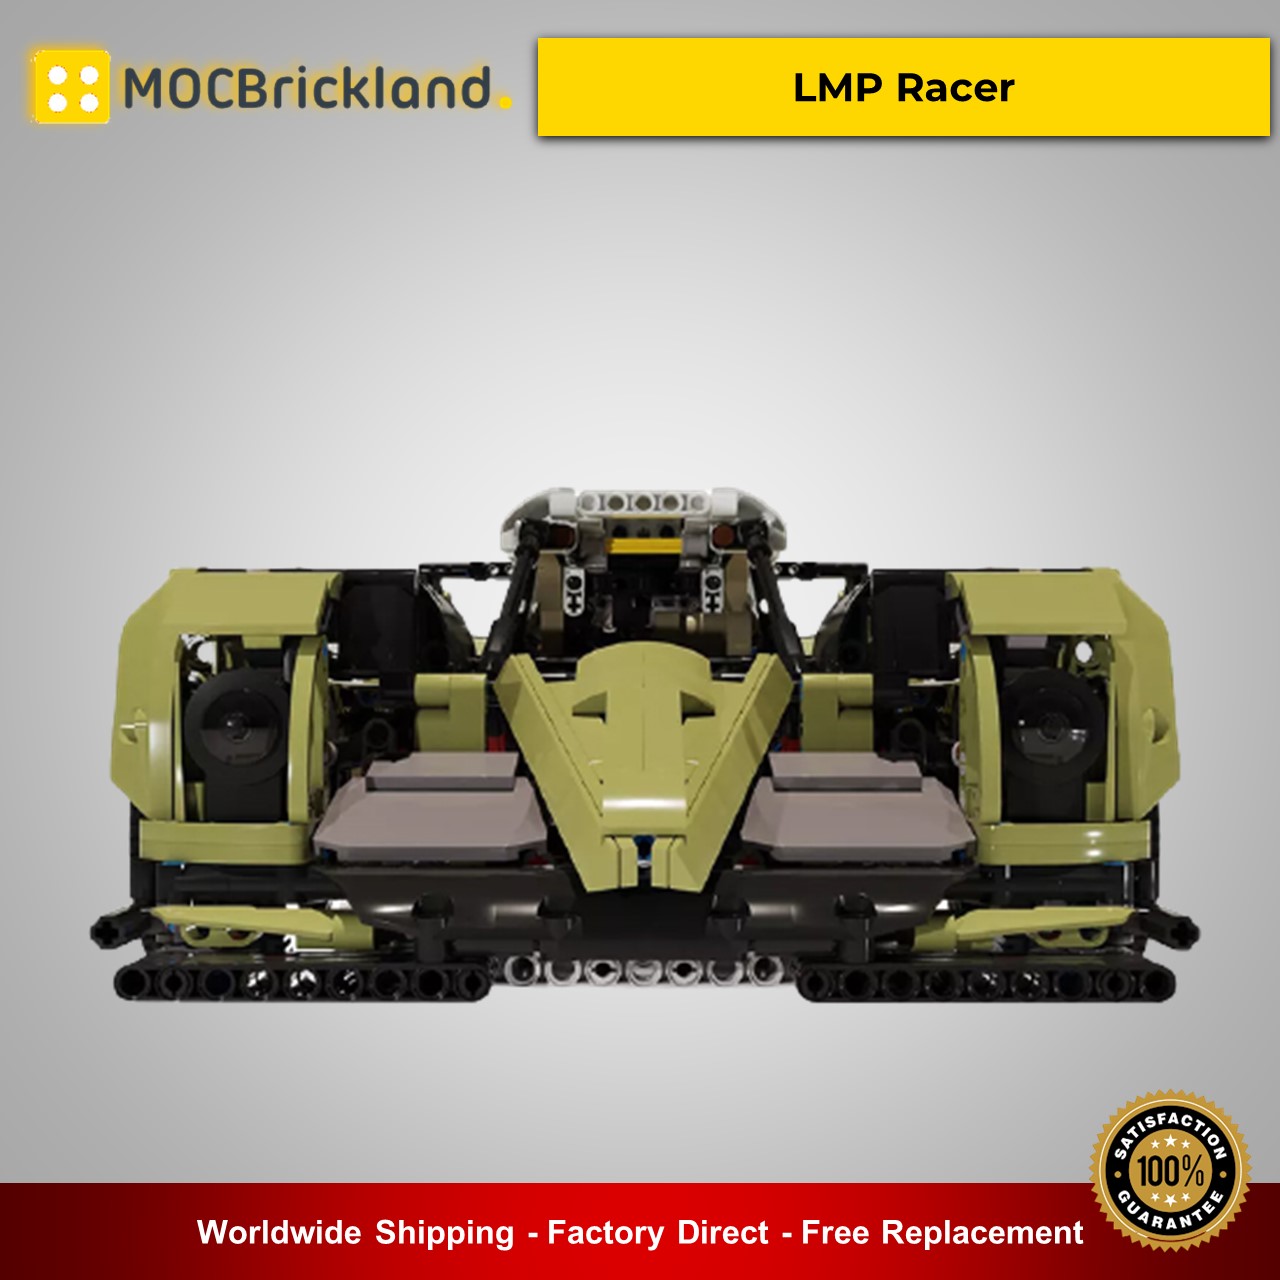 forbinde Eksklusiv tørst MOC-42338 Technic LMP Racer Alternative Build of LEGO Set 42110-1 Designed  By Dyens Creations With 2304 Pieces - MOC Brick Land